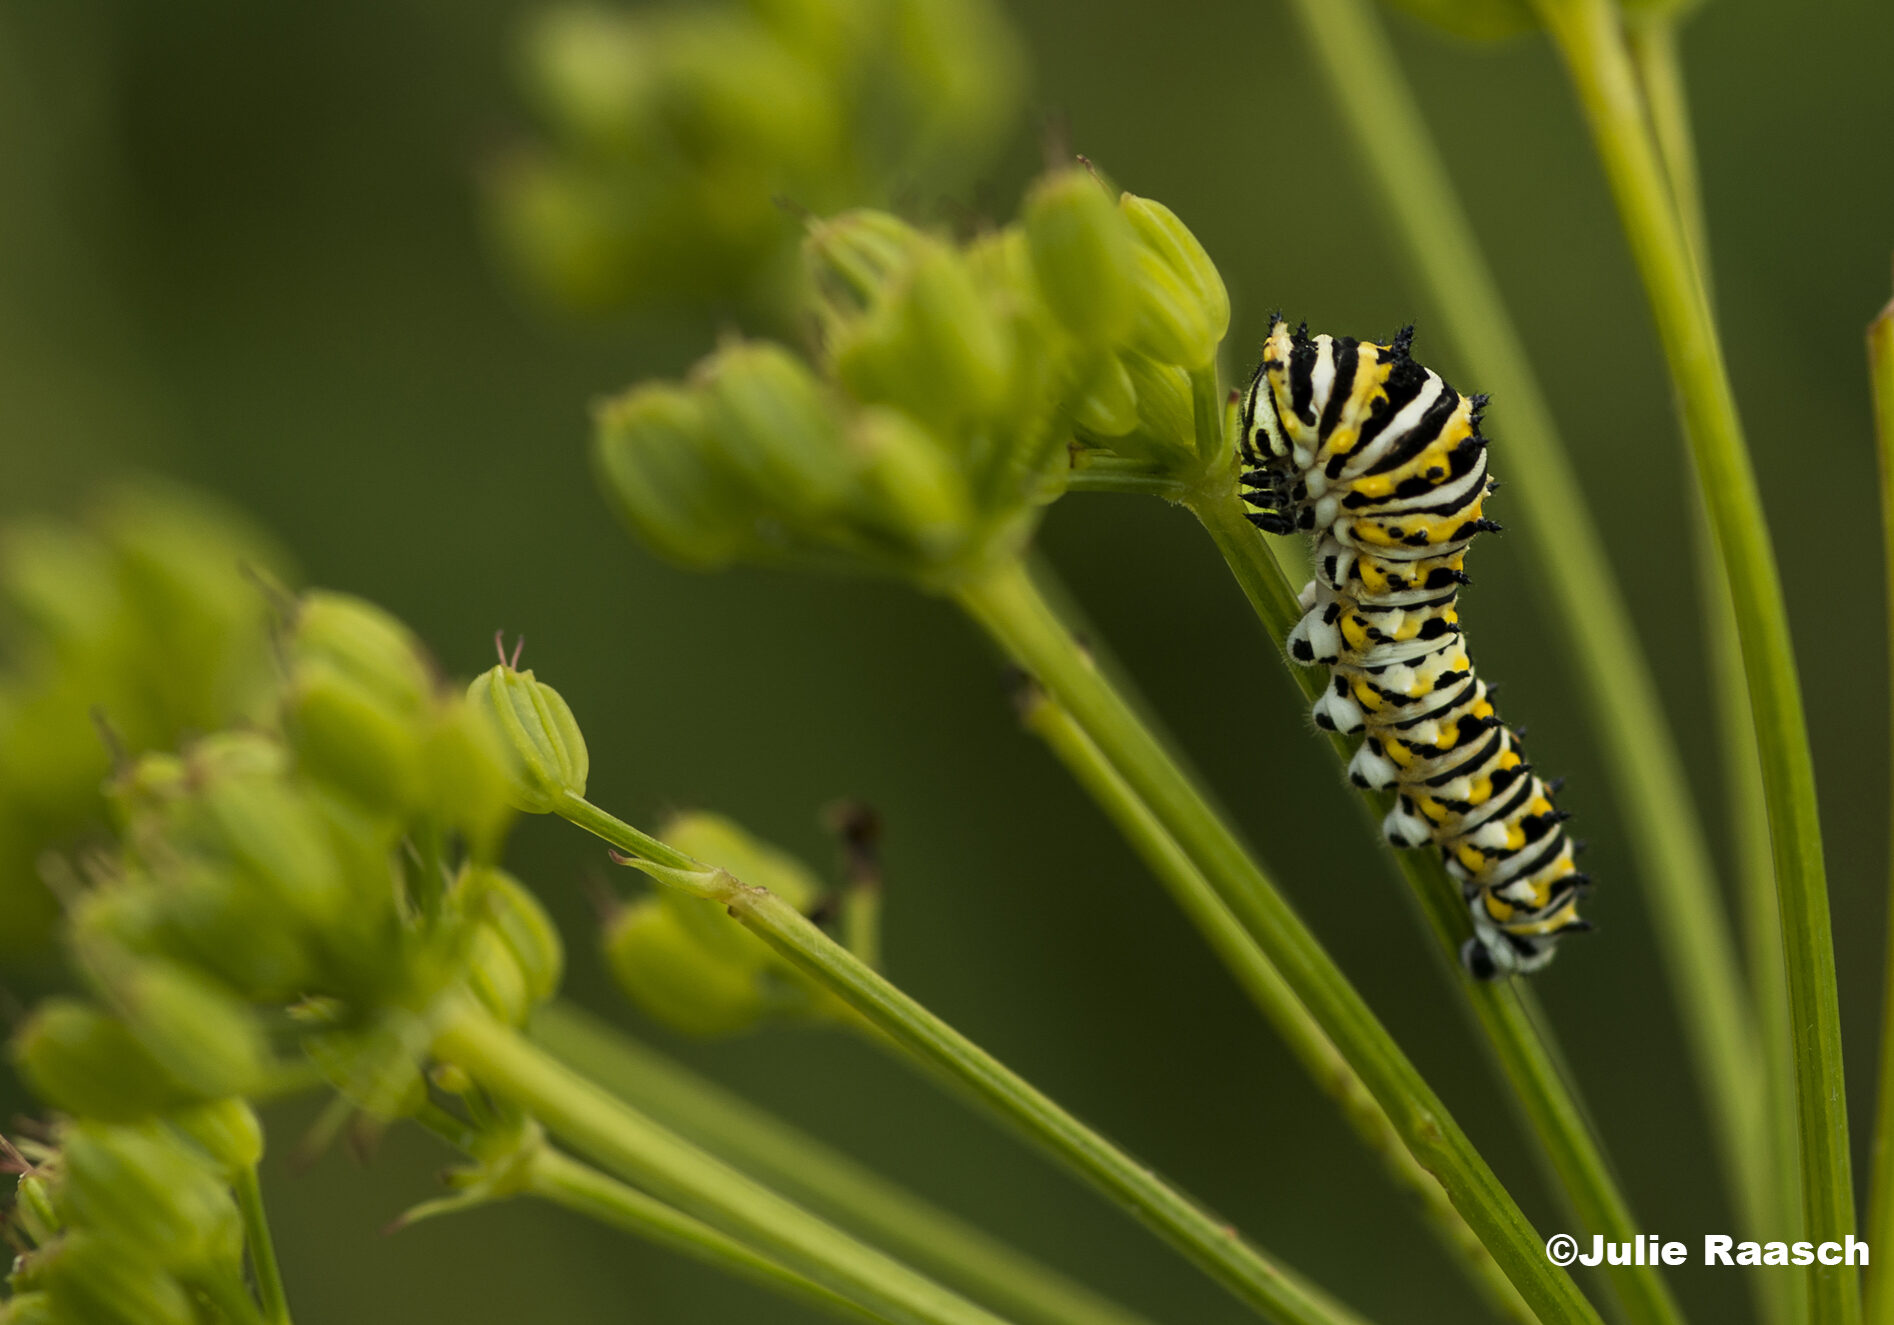 A caterpillar climbing the stalk of a plant